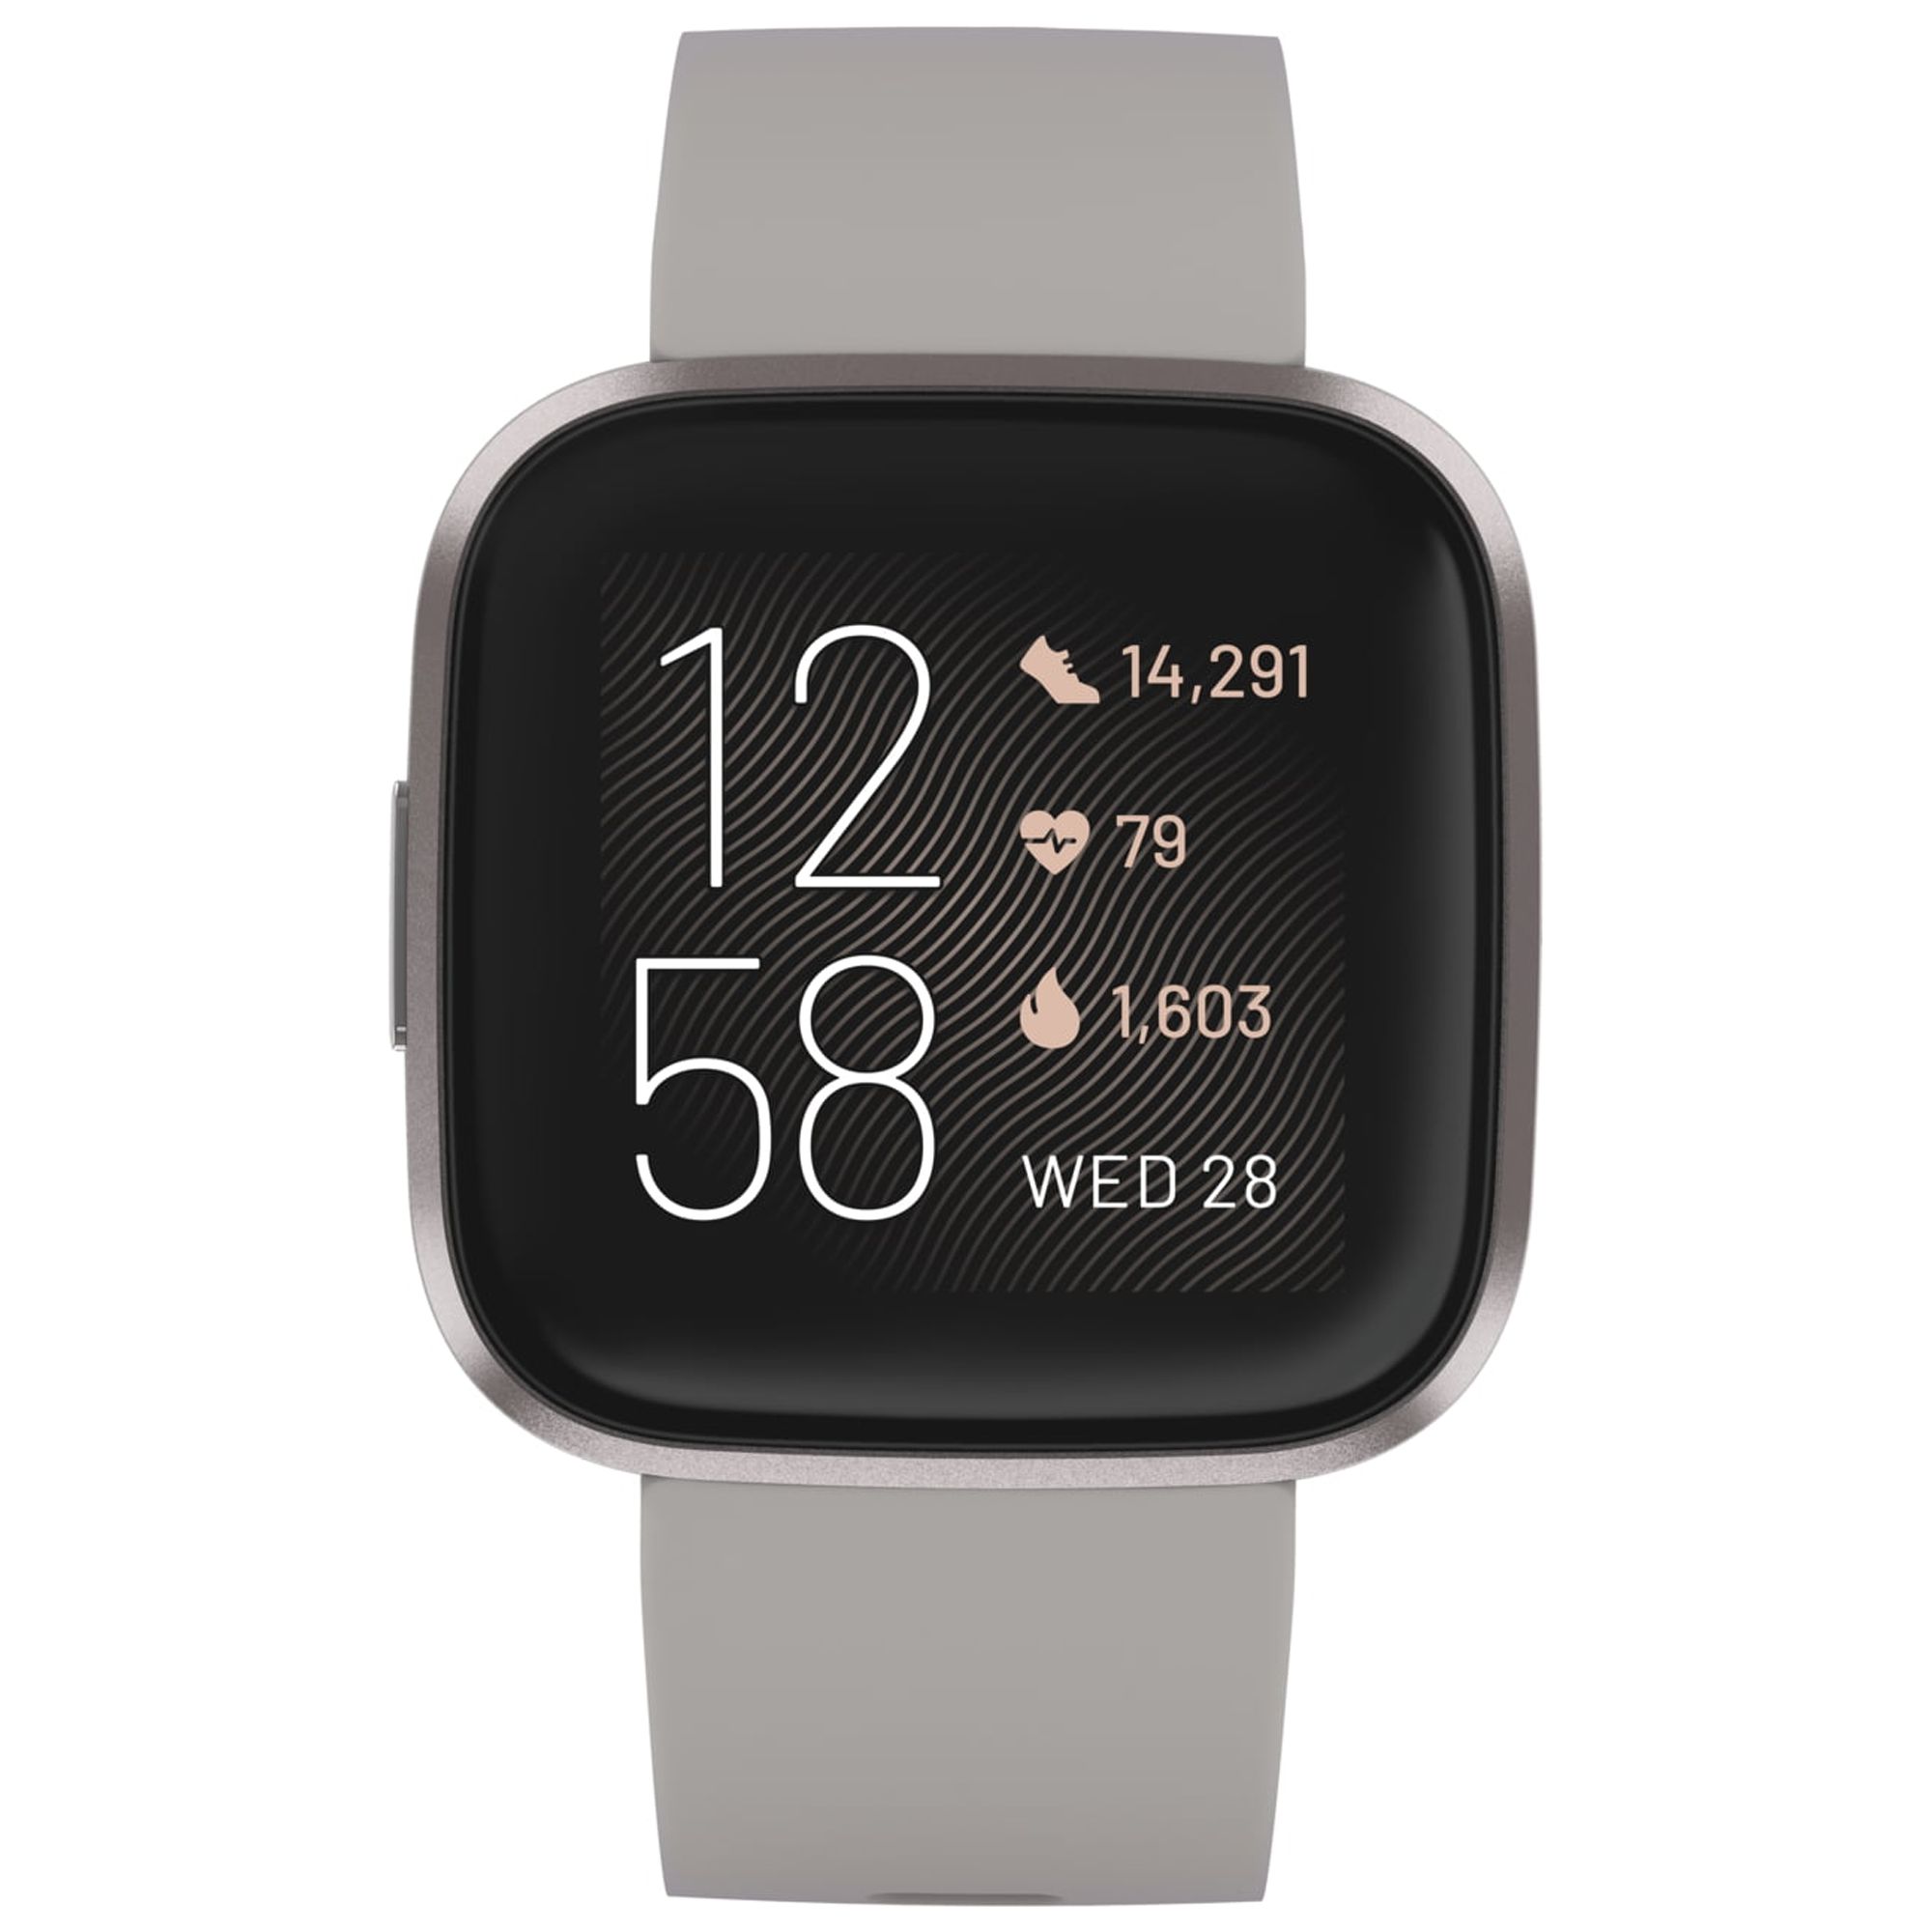 Fitbit Versa 2 Health & Fitness Smartwatch - Stone/Mist Grey Aluminum - image 5 of 7